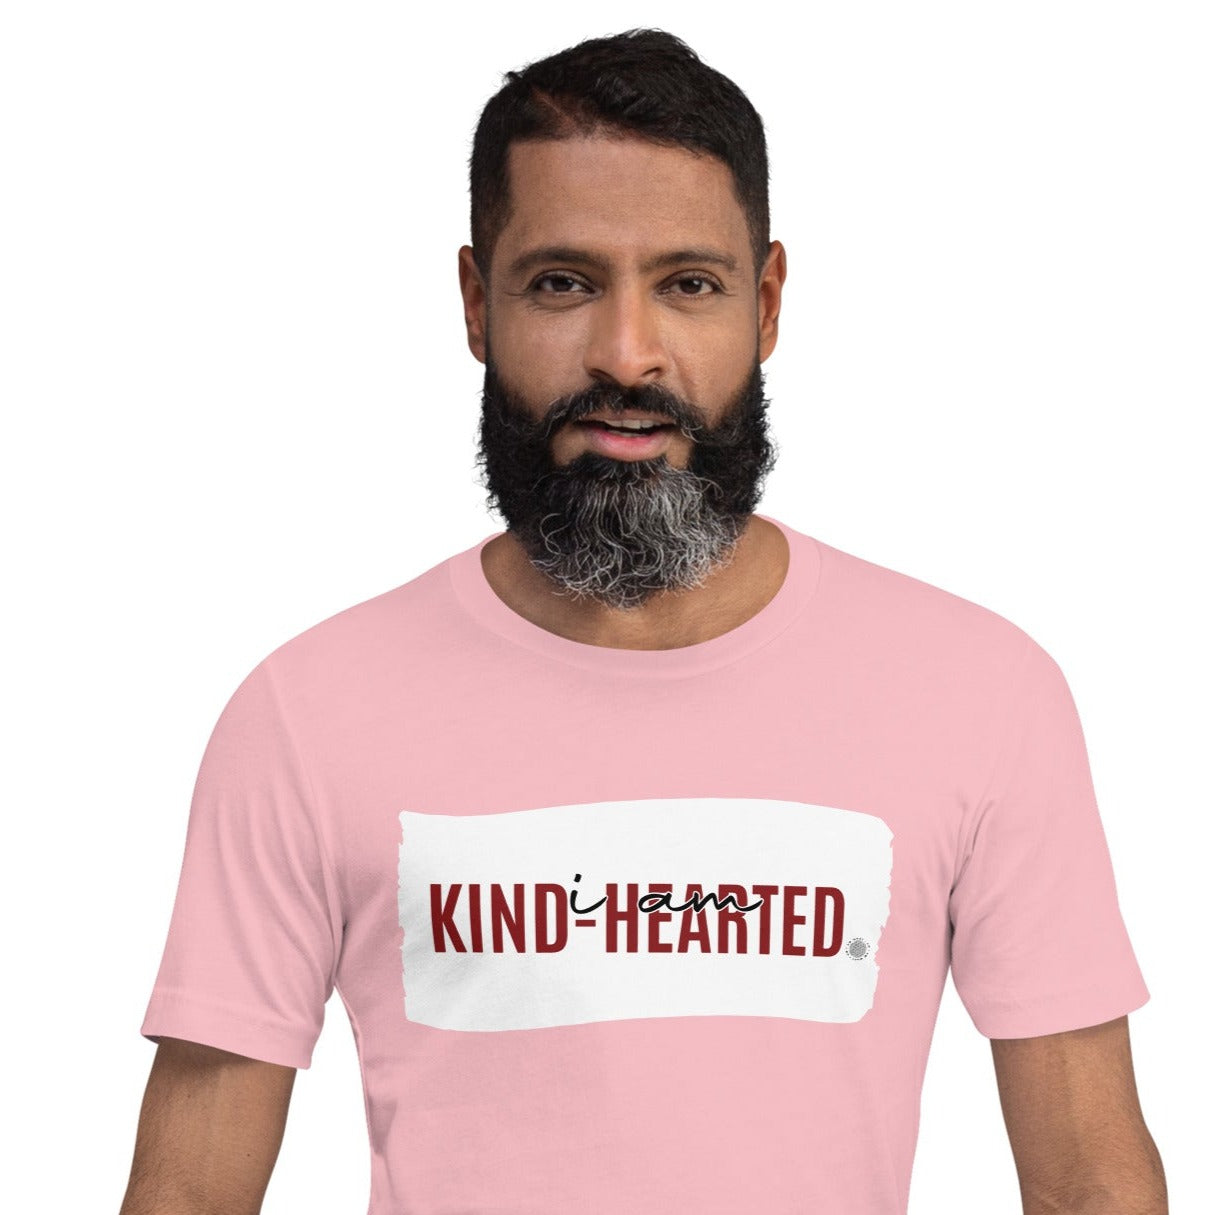 I Am Kind-Hearted Adult Unisex T-Shirt pink